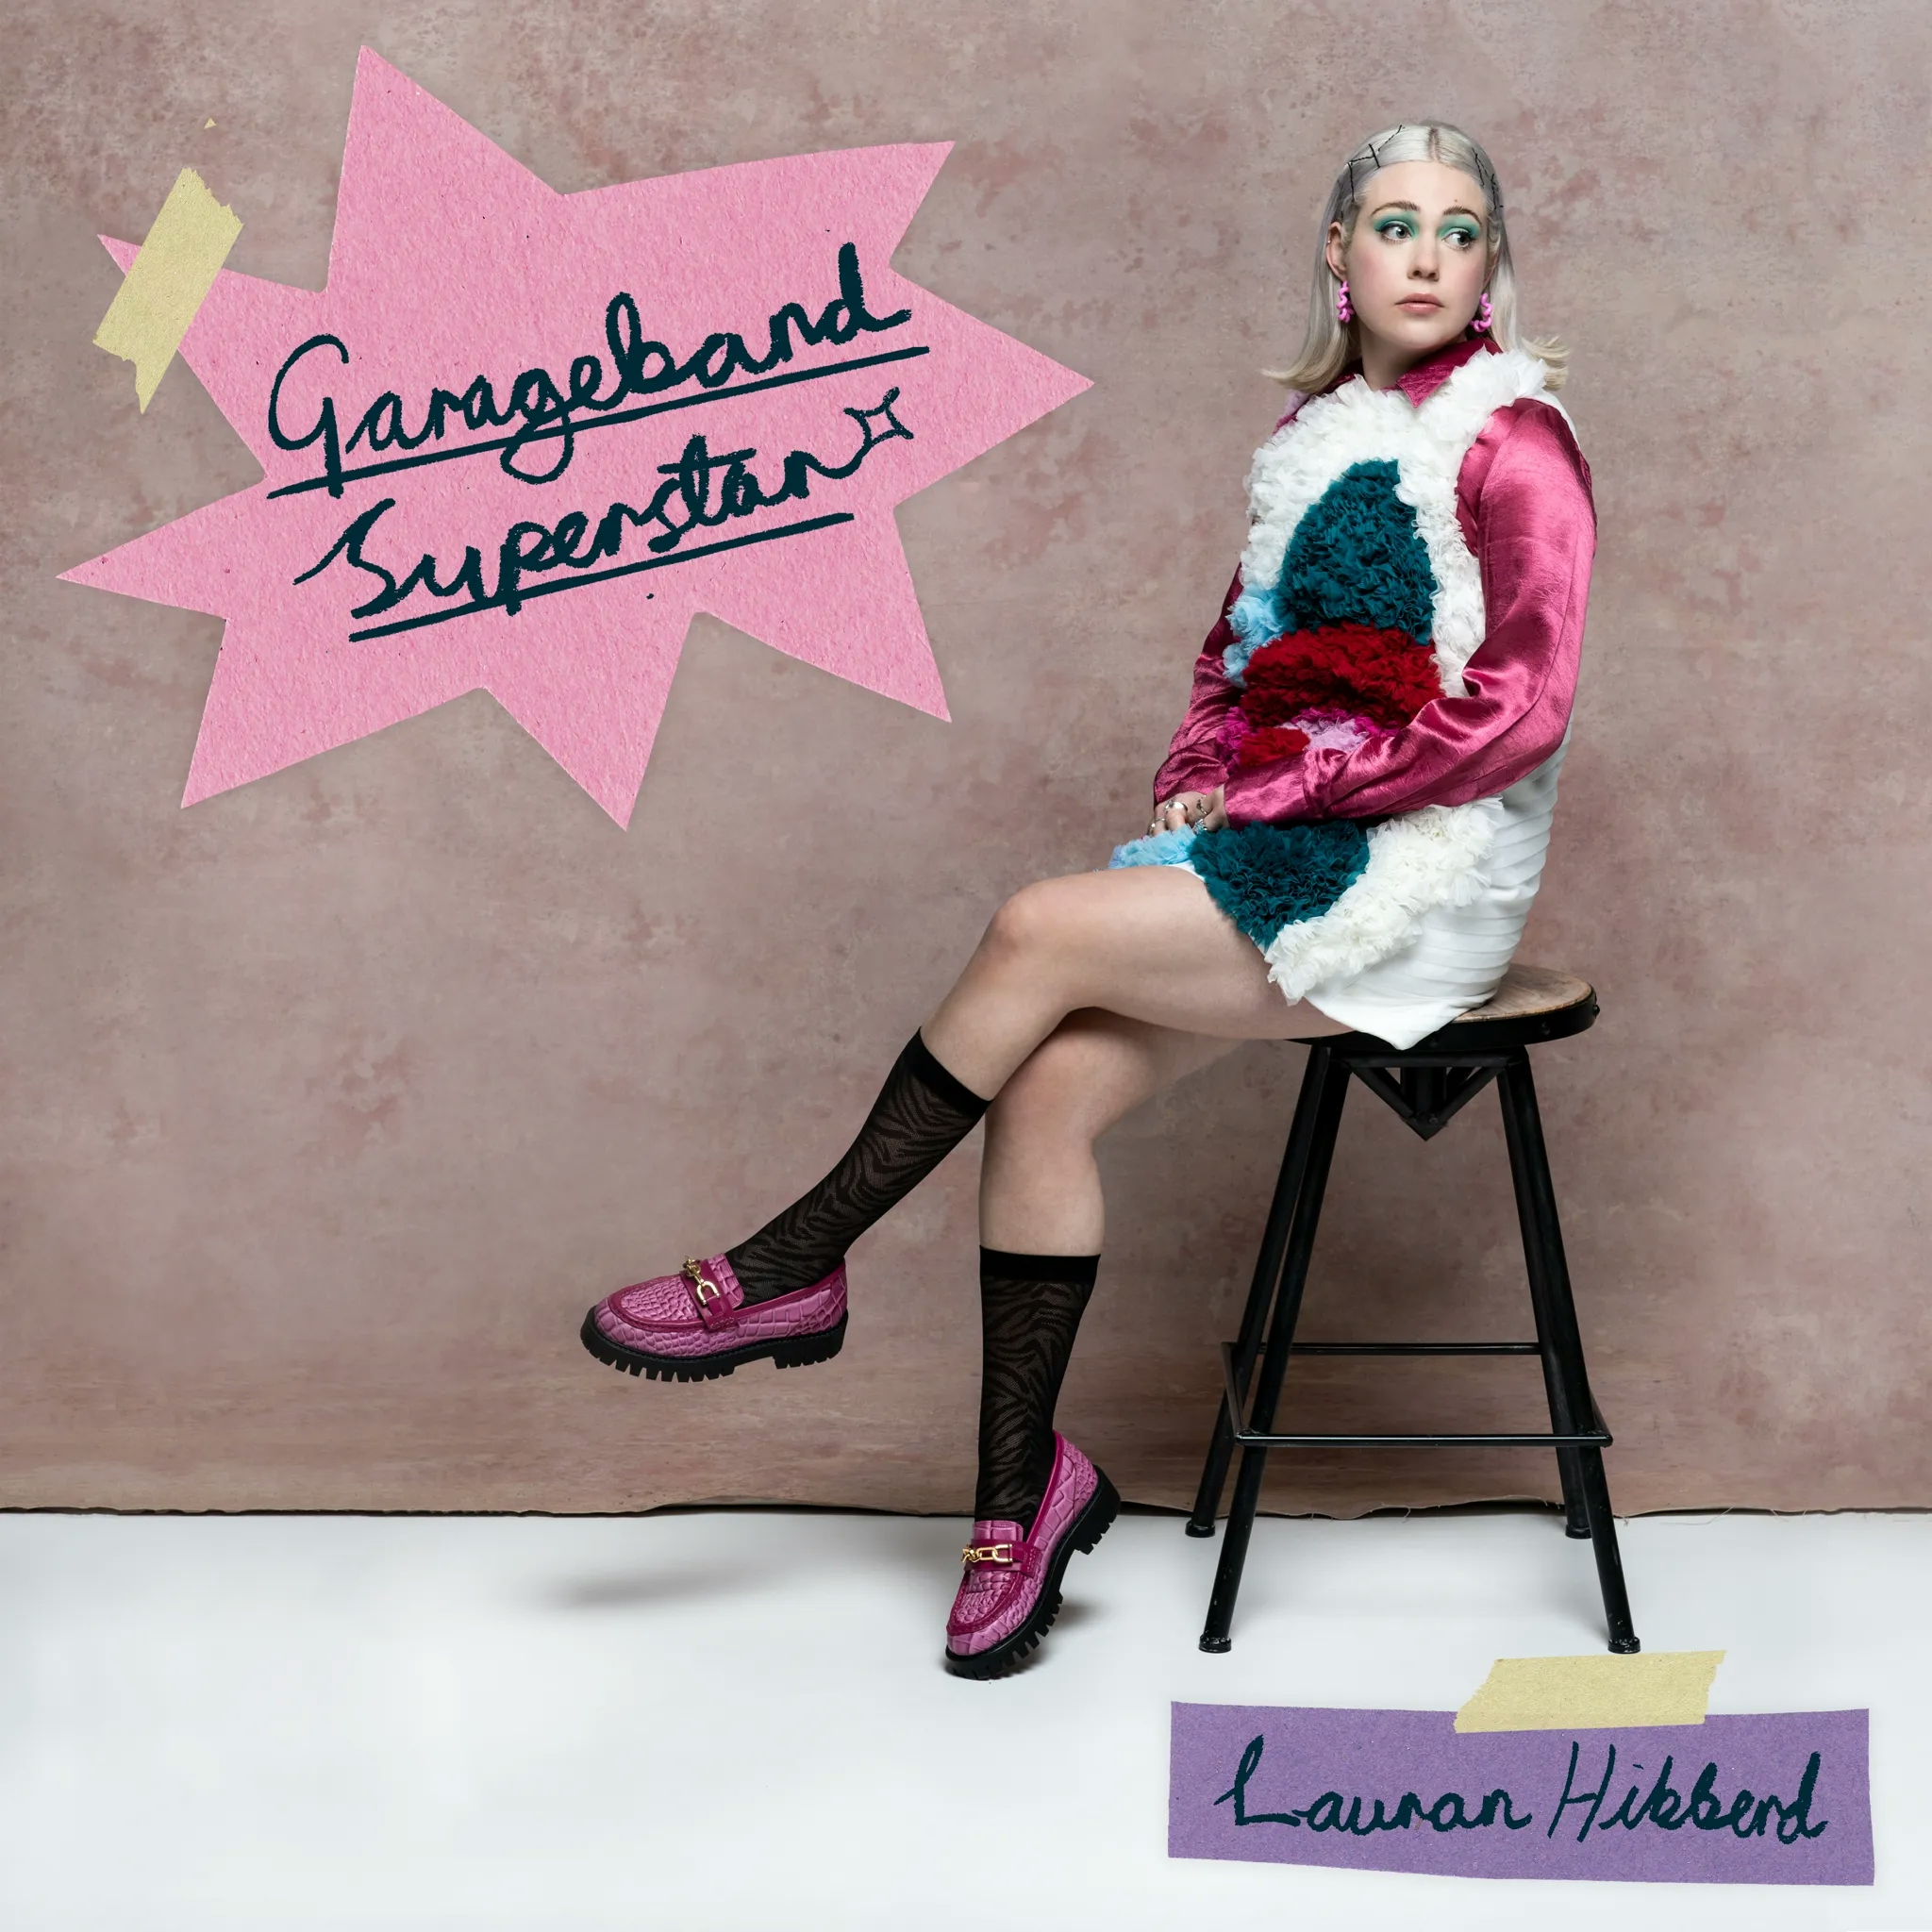 Album artwork for Garageband Superstar by Lauran Hibberd